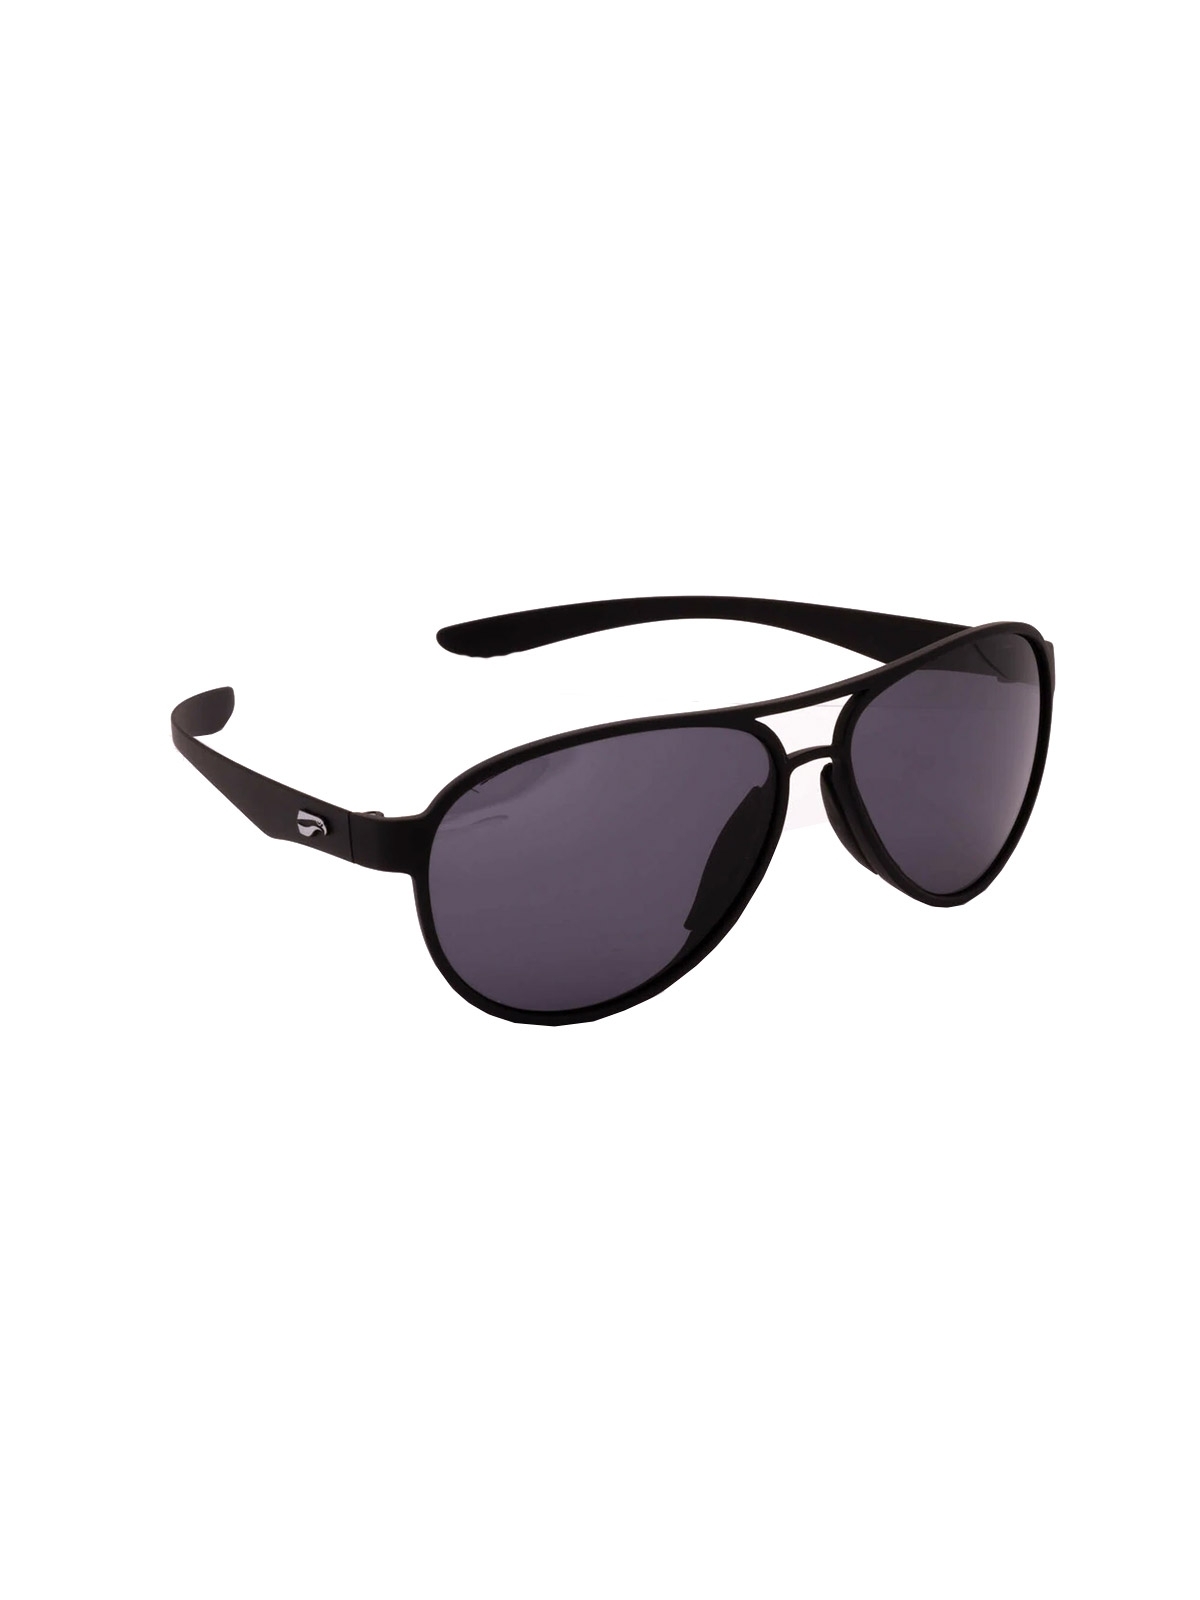 Flying Eyes Sonnenbrille Kestrel Aviator - Rahmen matt schwarz, Linsen grau